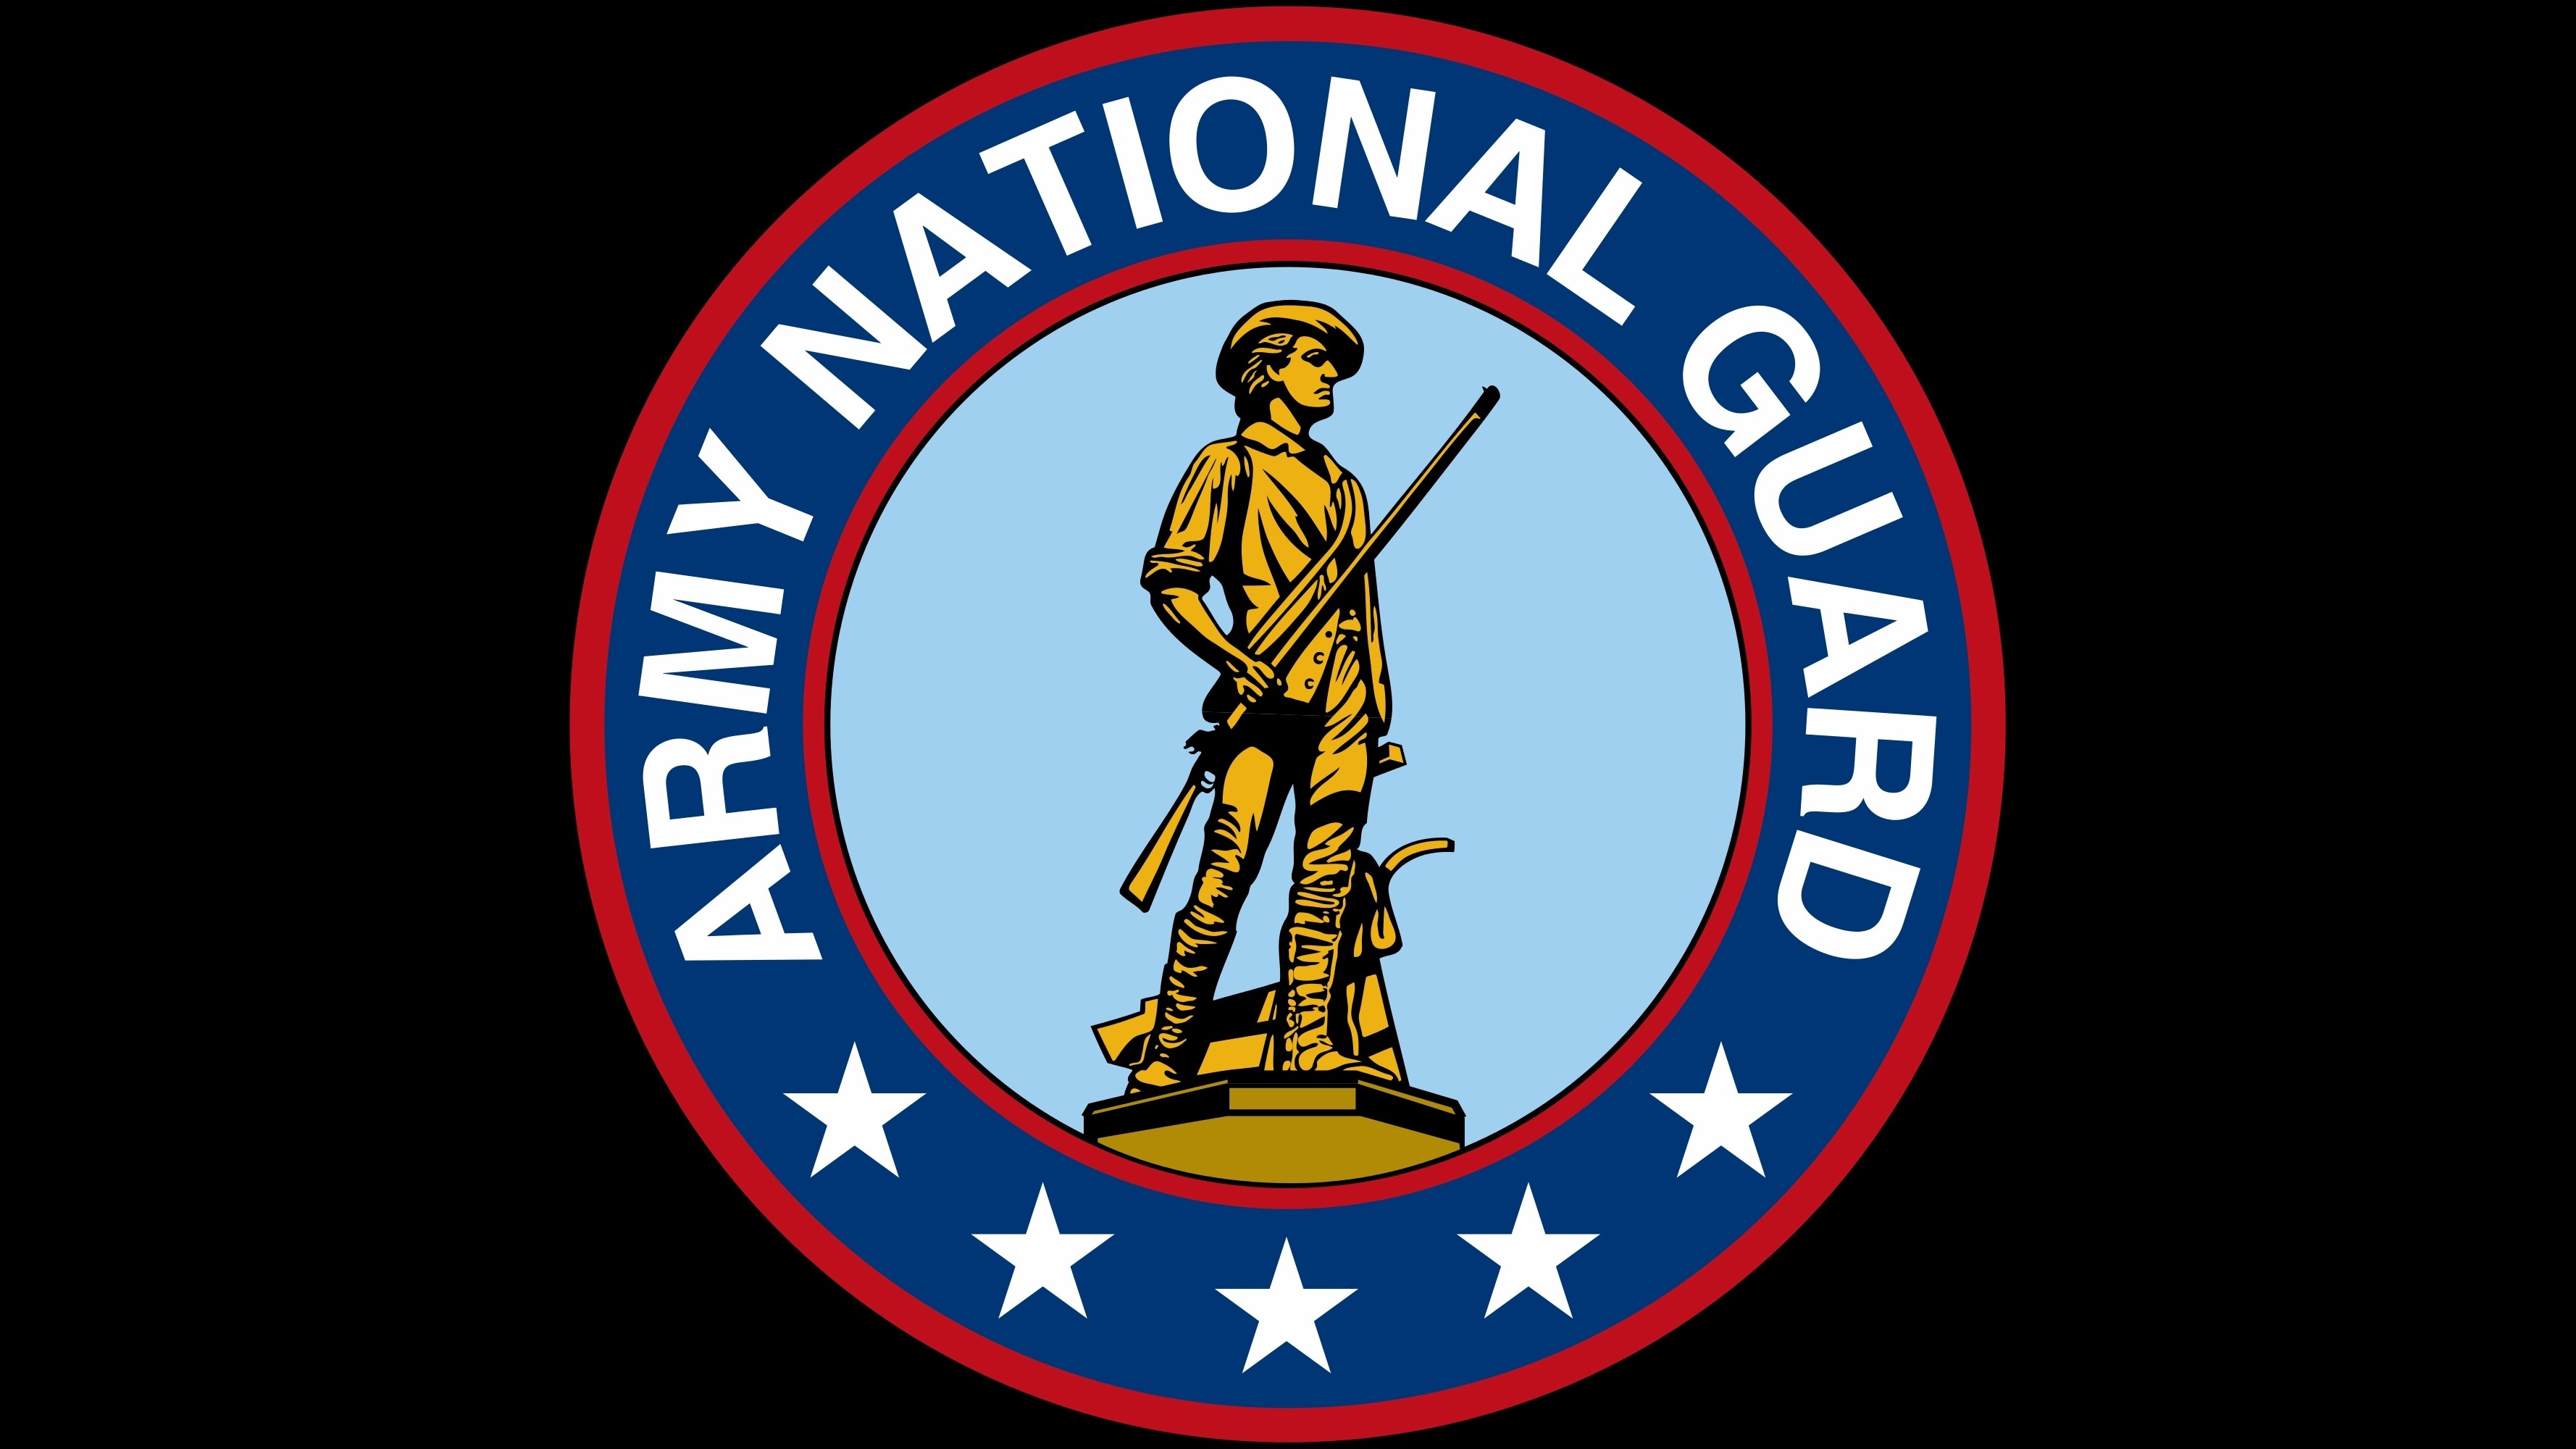 National Guard Wallpaper - Army National Guard , HD Wallpaper & Backgrounds